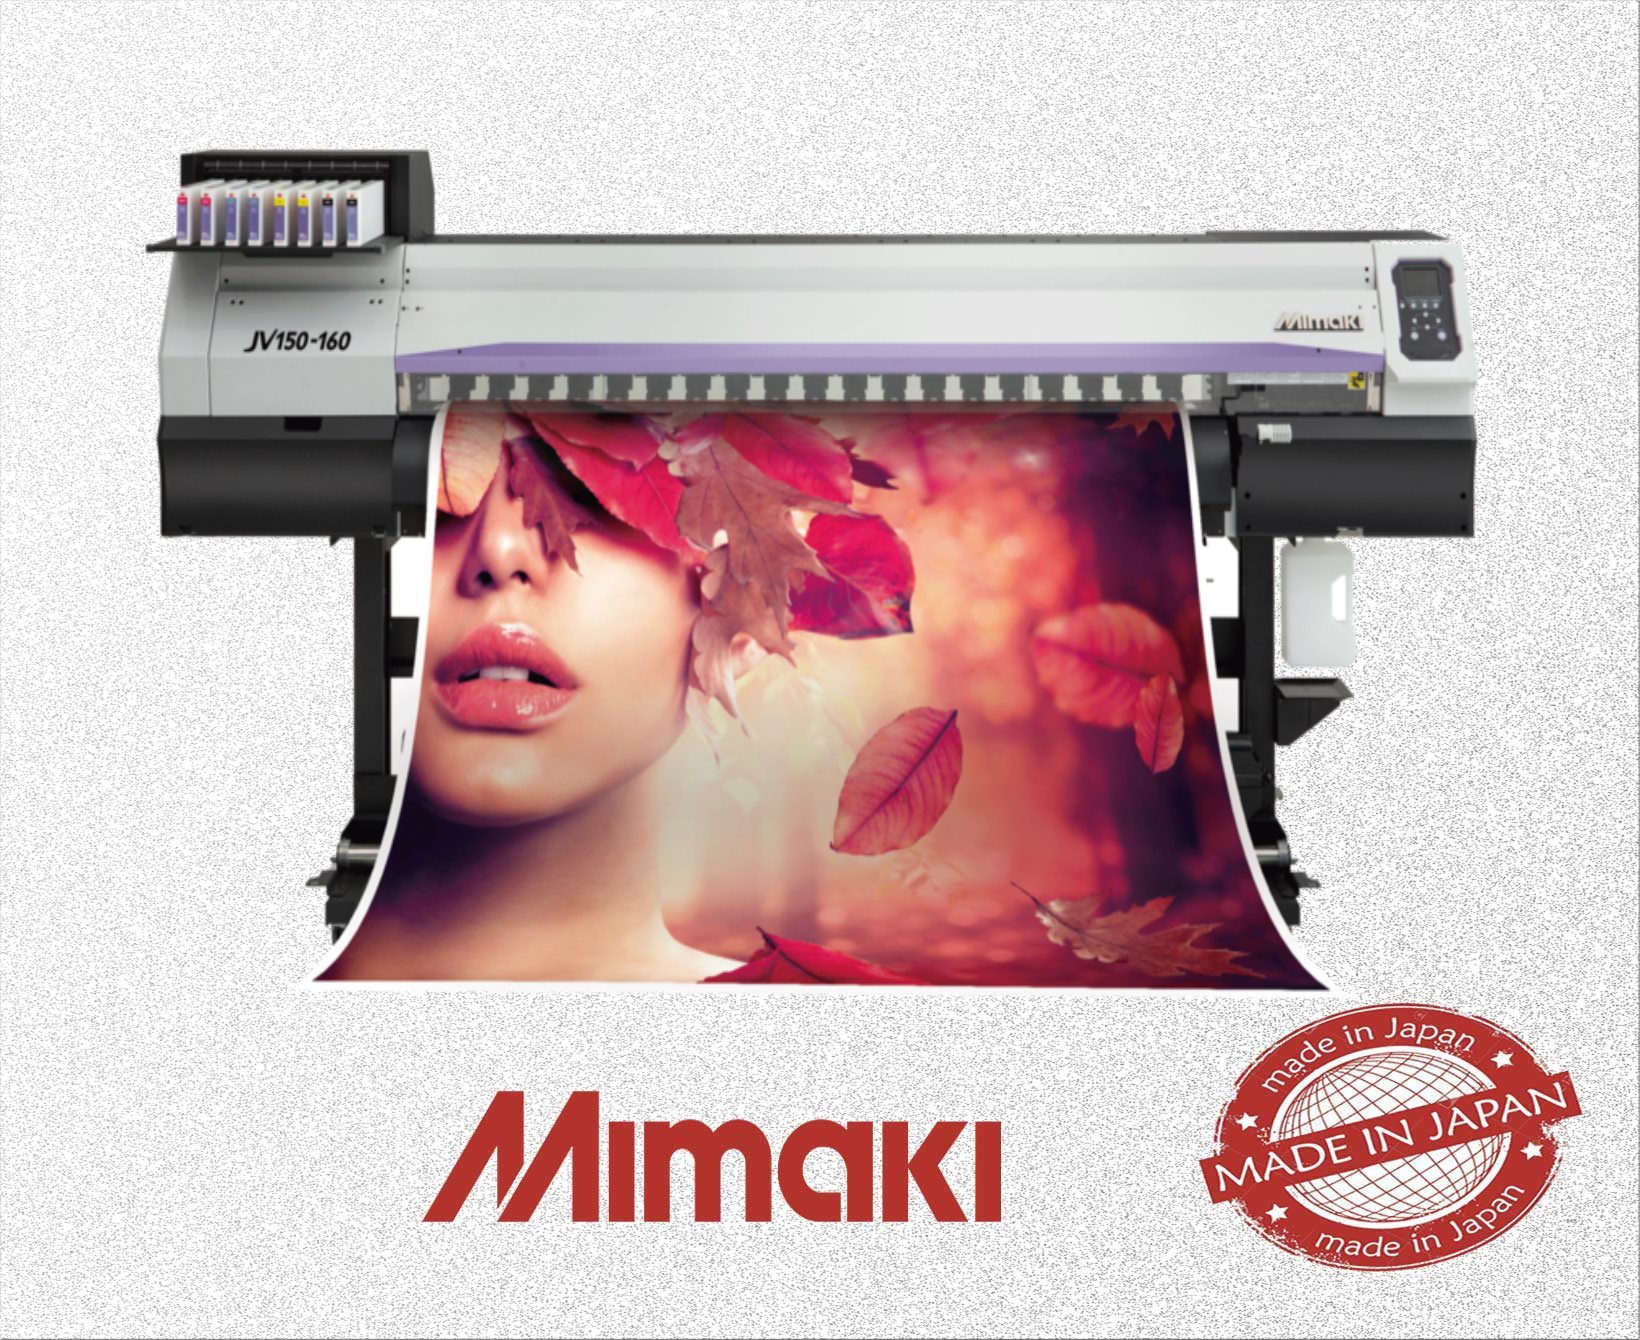  Mimaki JV 150-160 ماكينة طباعة ديجيتال على القماش